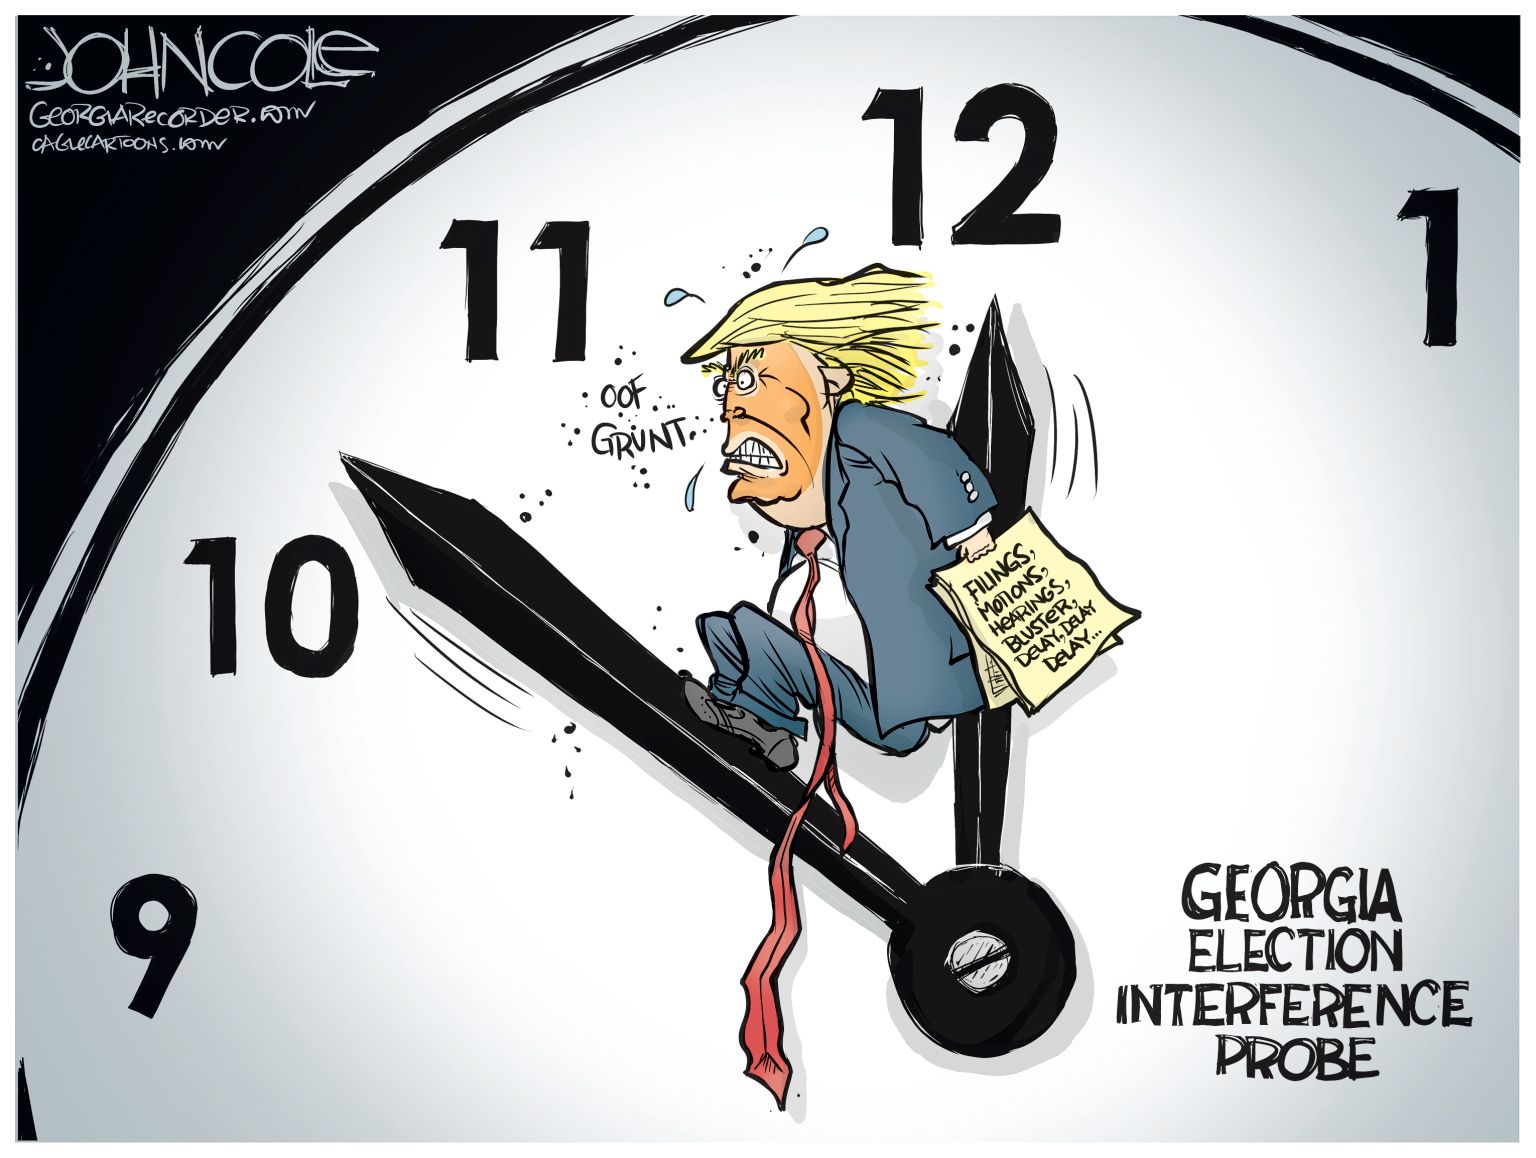 newsjustin.press - Trump and Georgia election probe - political cartoon